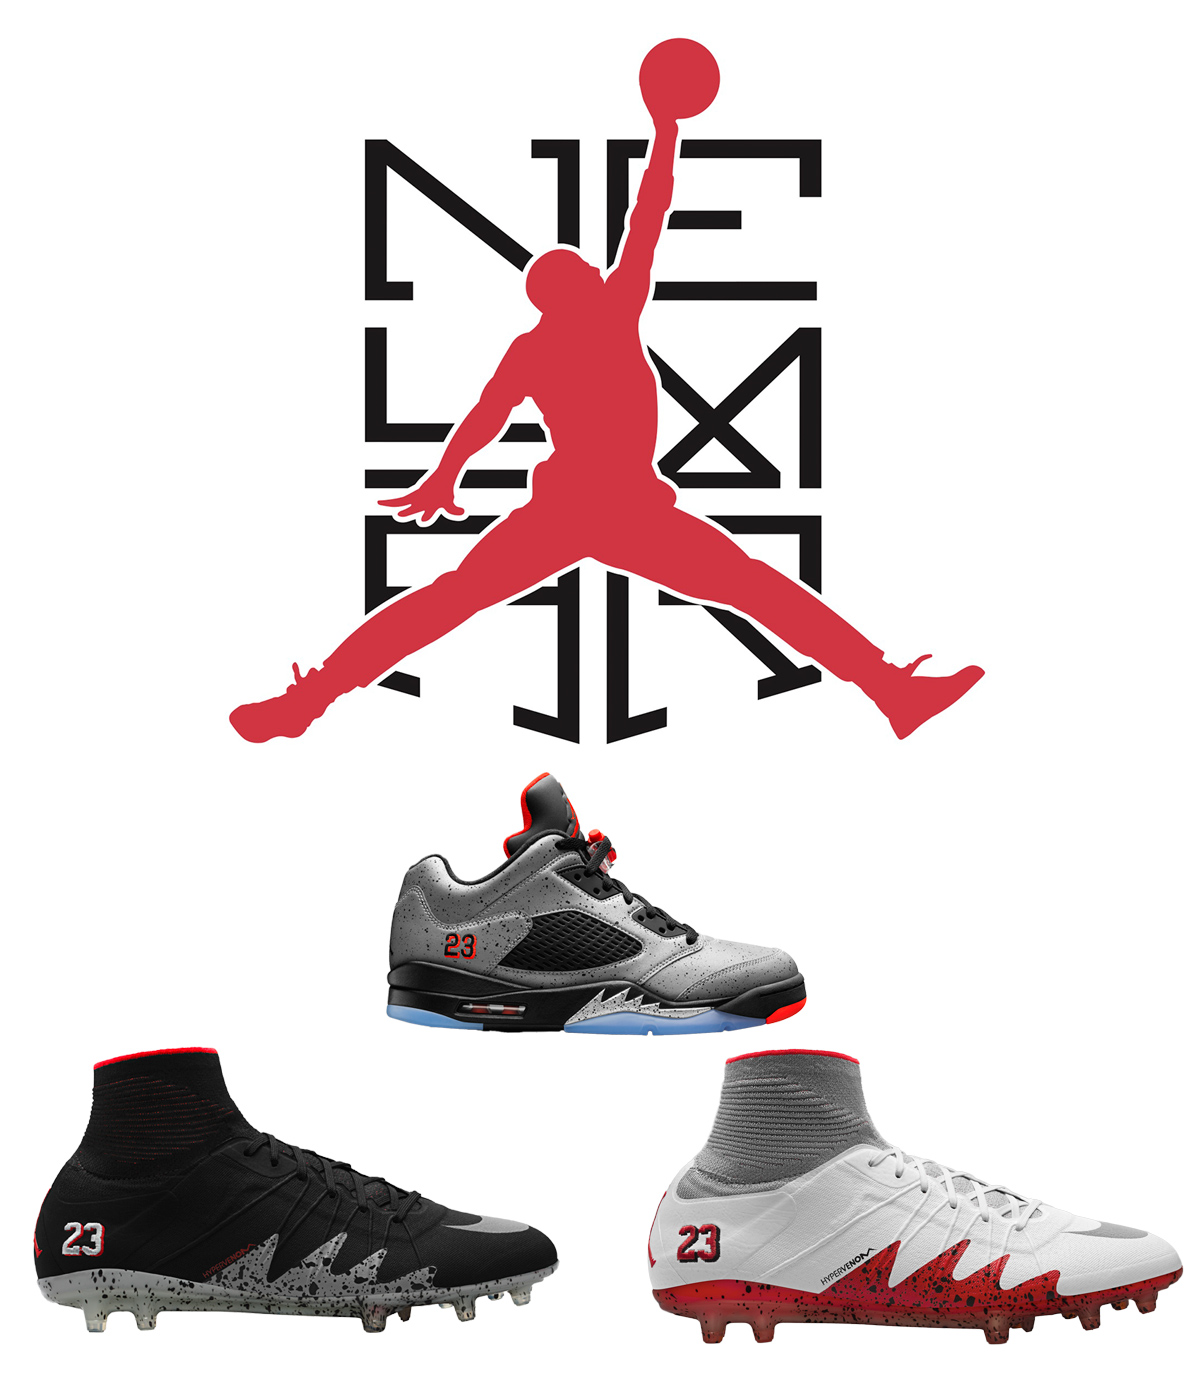 Nike NJR X Jordan Collectionâ€¦ El de la Neymar-Jordan abcdefutbol